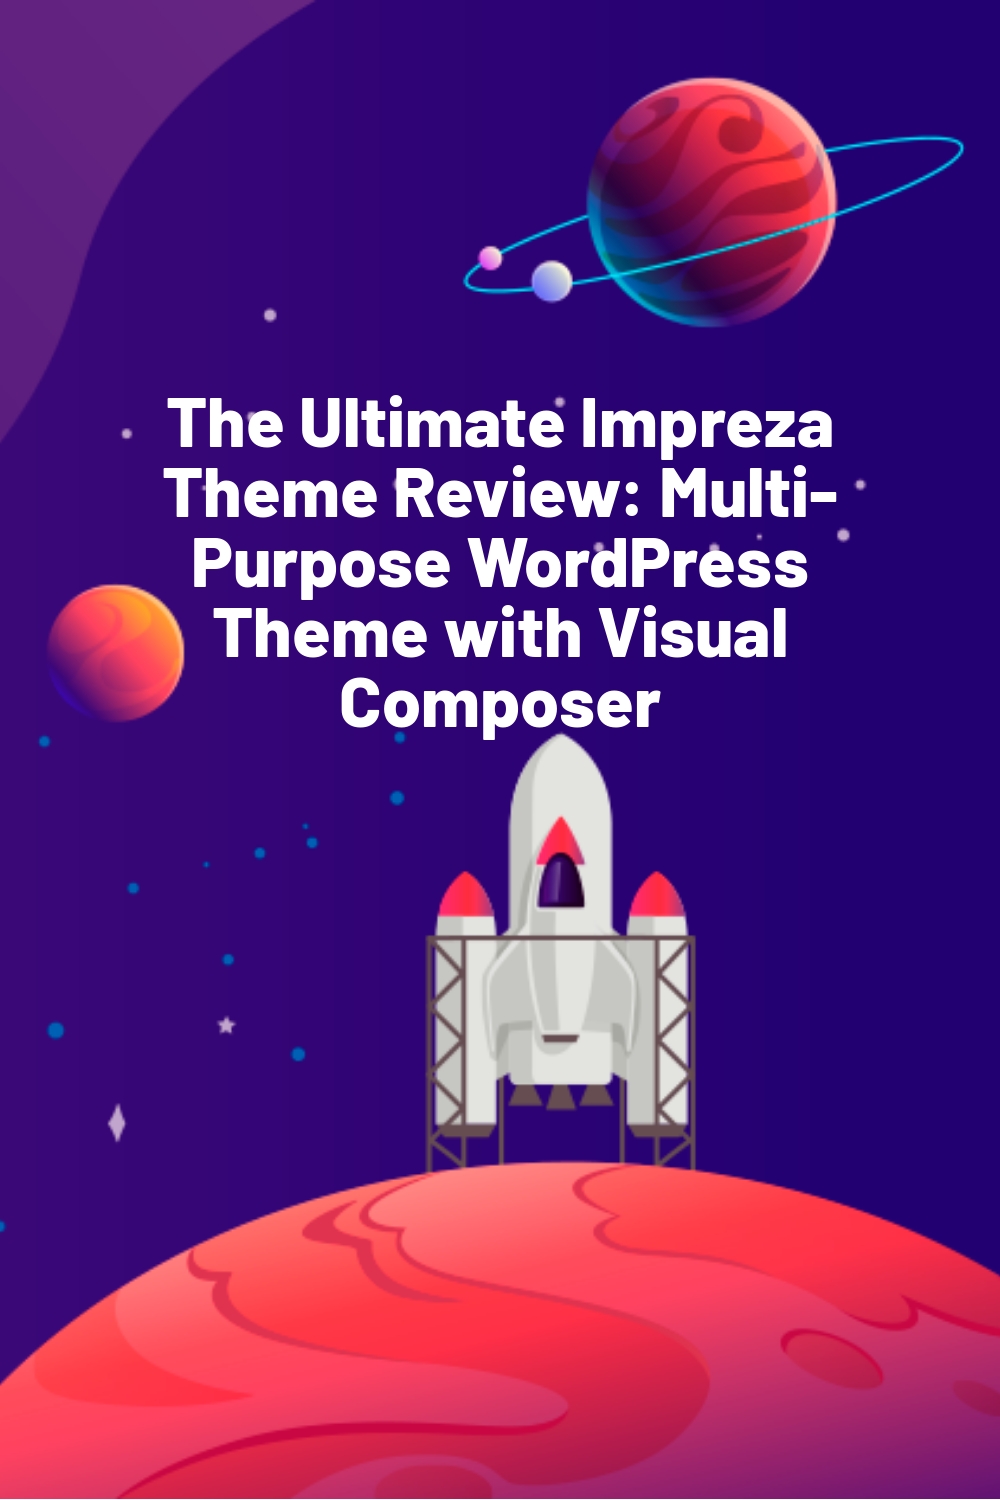 The Ultimate Impreza Theme Review: Multi-Purpose WordPress Theme with Visual Composer